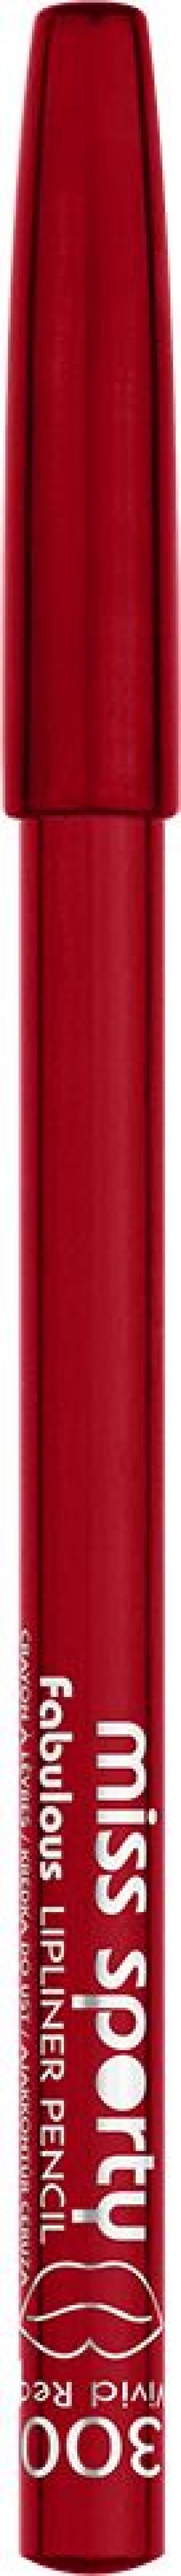 Miss Sporty Fabulous Lipliner Pencil konturówka do ust 300 Vivid Red 4ml 1